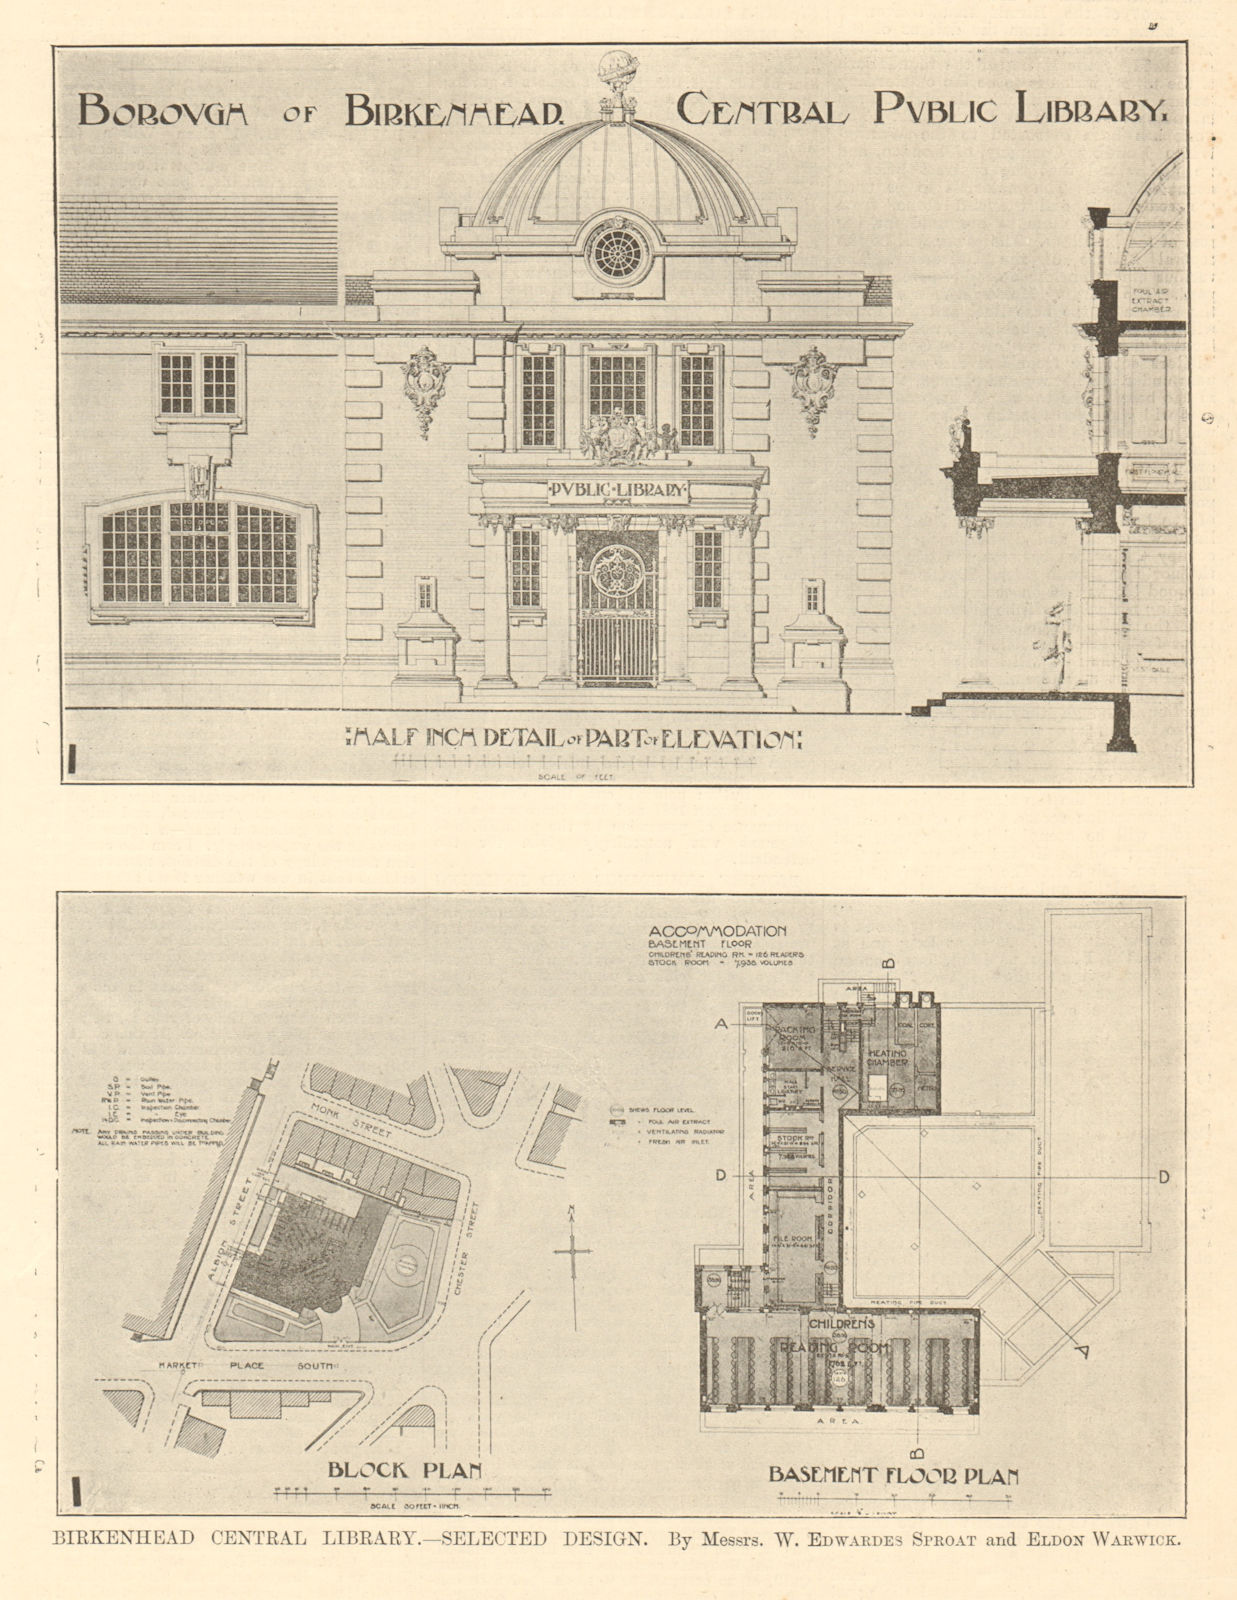 Associate Product Birkenhead Central Library by Edwardes Sproat & Eldon. Elevation block plan 1907